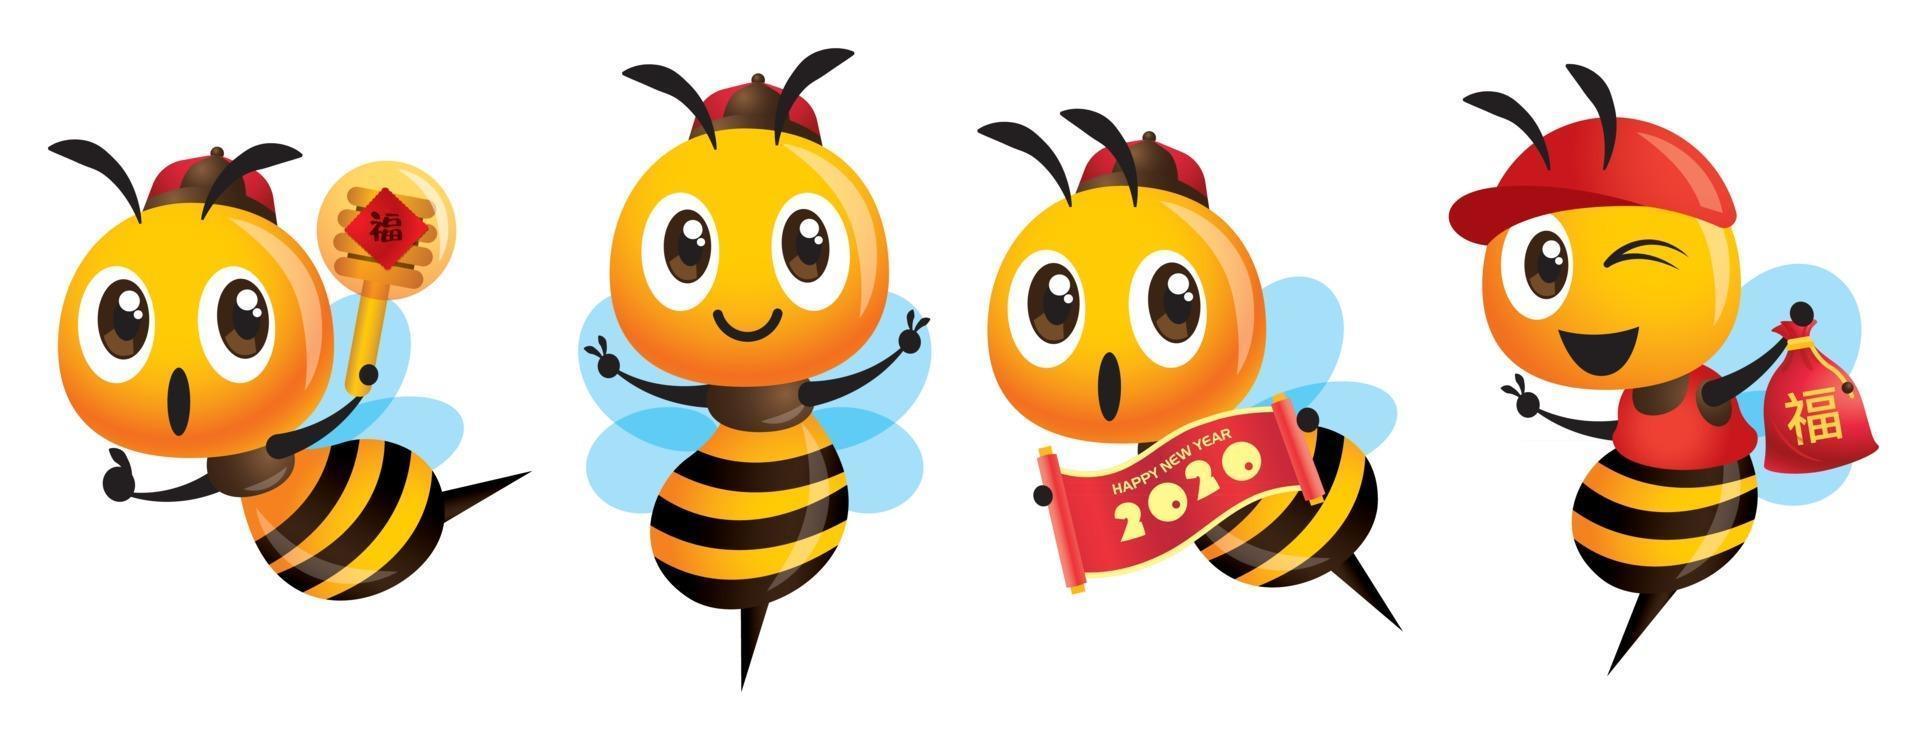 mascota de abeja linda de dibujos animados con gorro chino celebrando el año nuevo chino vector